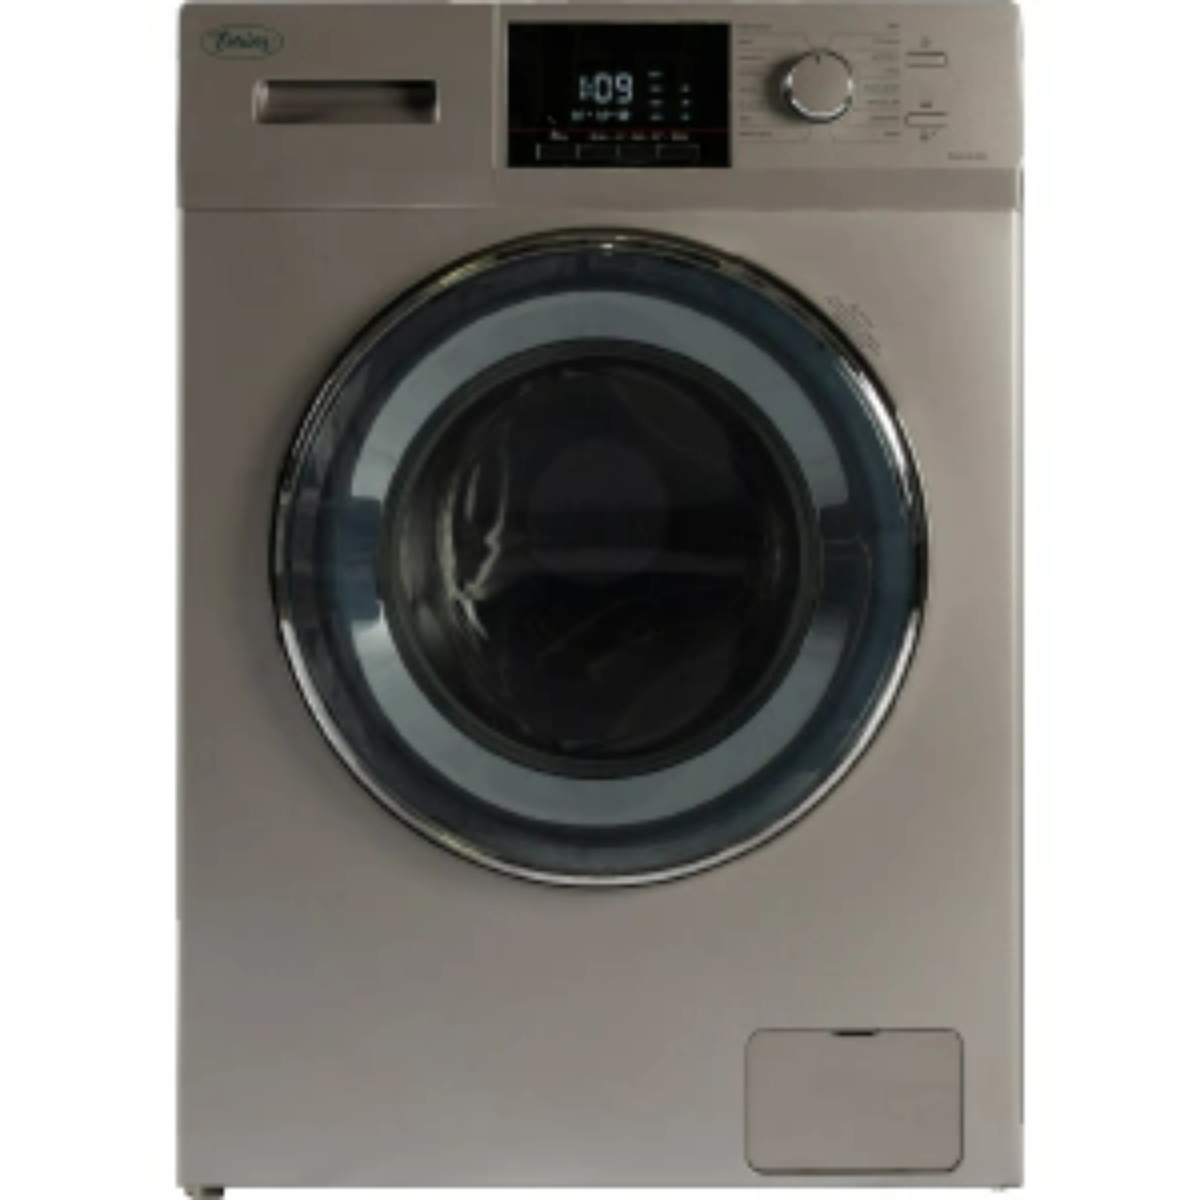 Terim Front Load Washing Machine, 7 kg, 1200 RPM, Silver, TERFL71200S